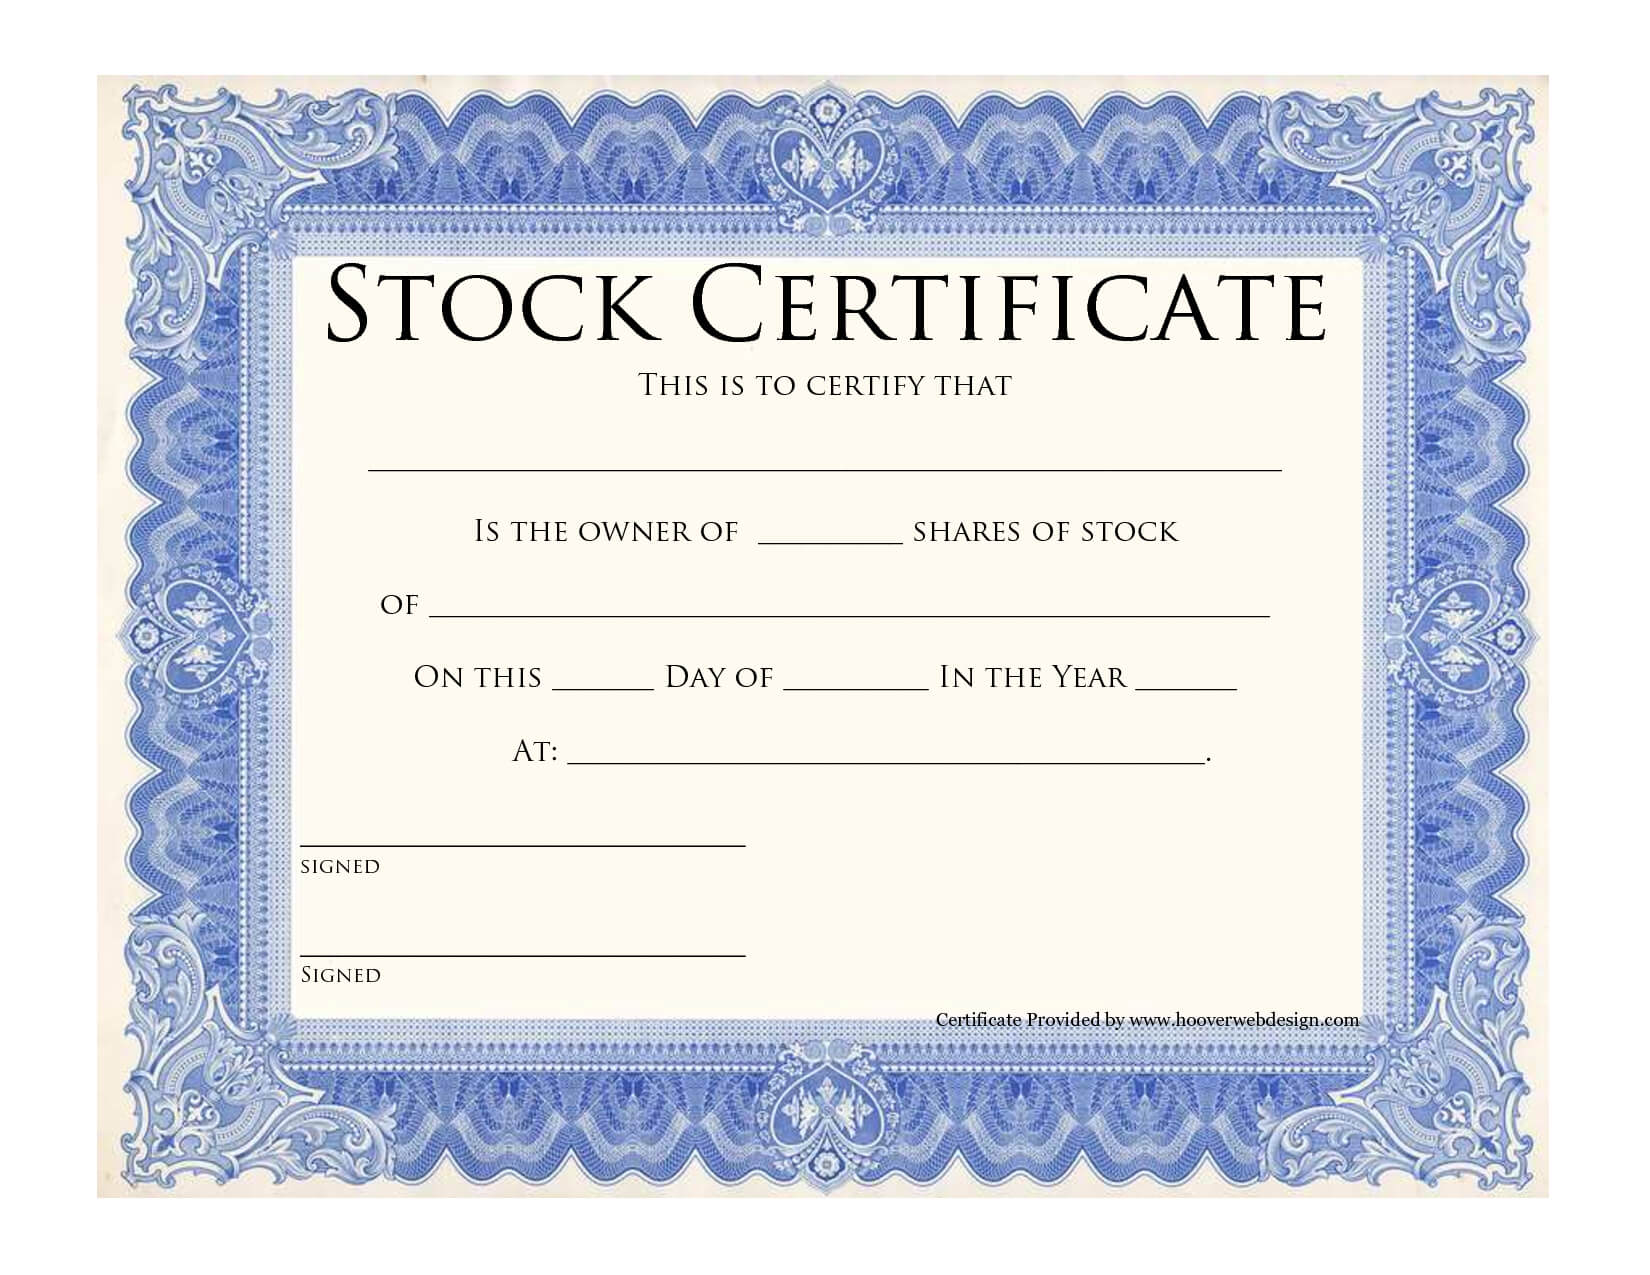 Blank Stock Certificate Template | Printable Stock Regarding Stock Certificate Template Word